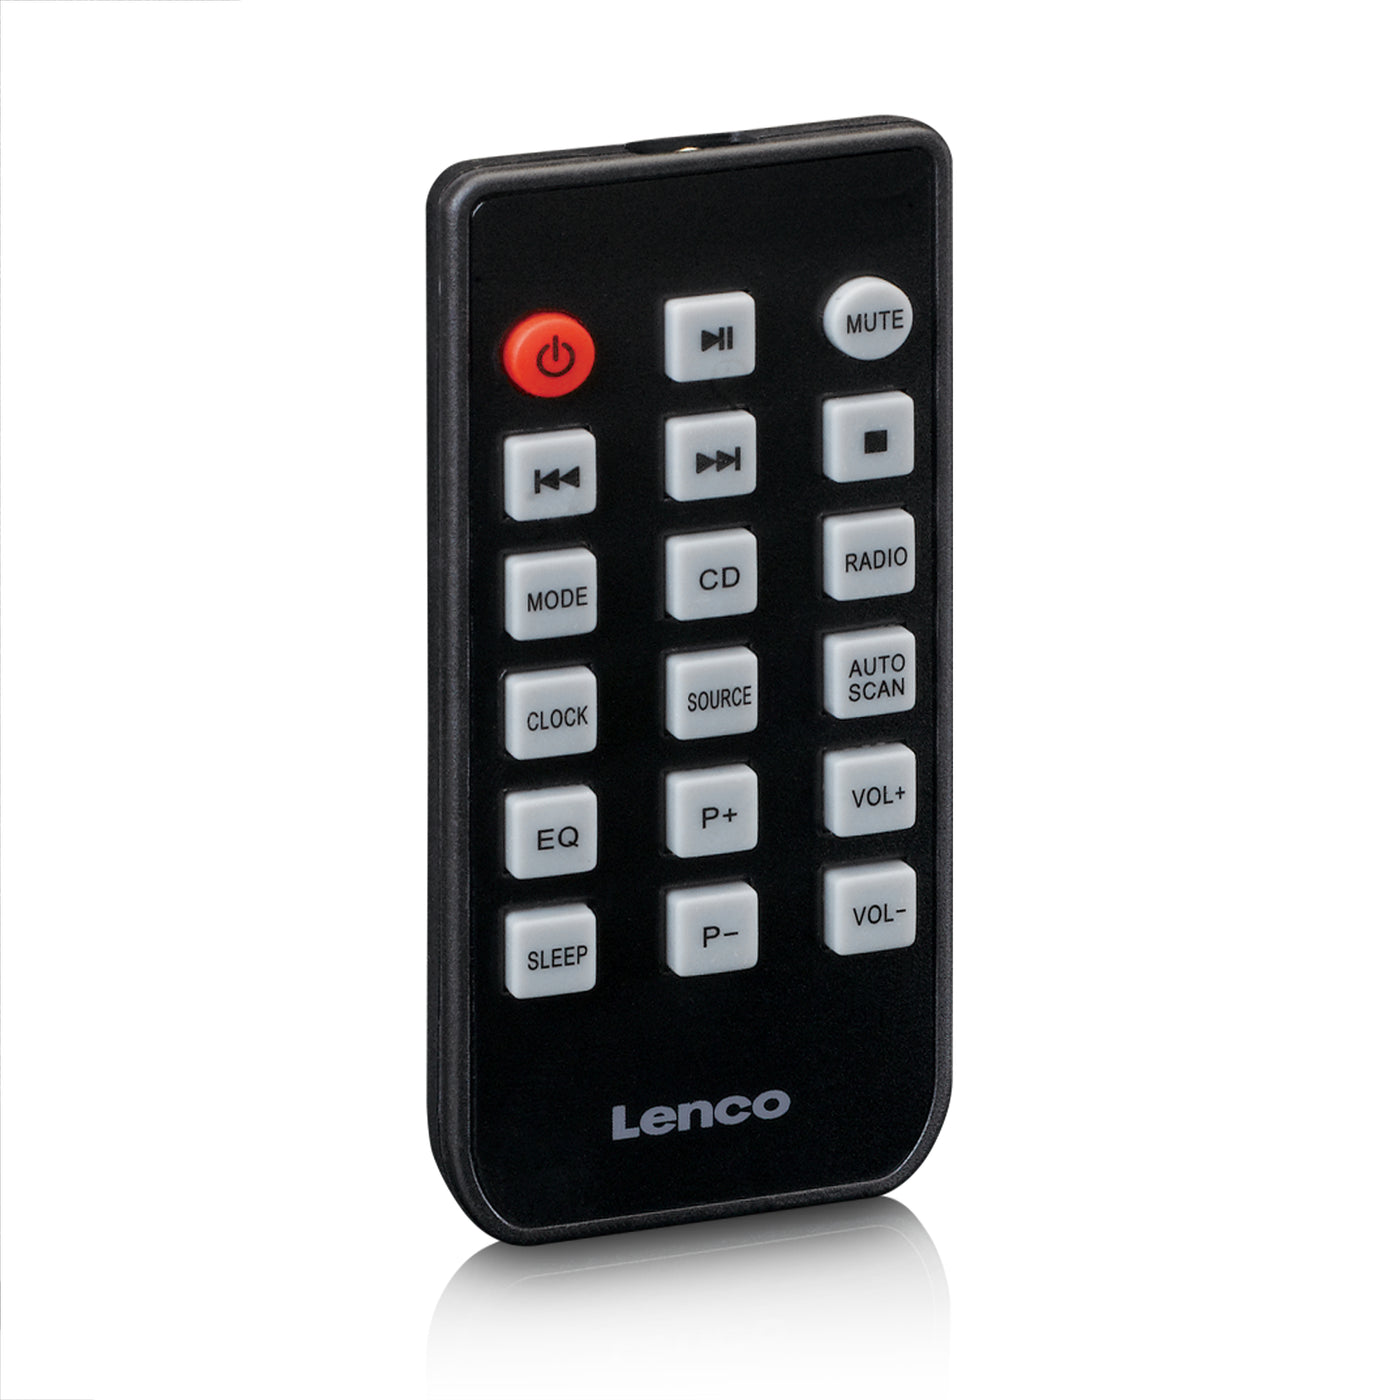 LENCO MC-030BK - Micro set with CD/ MP3 player